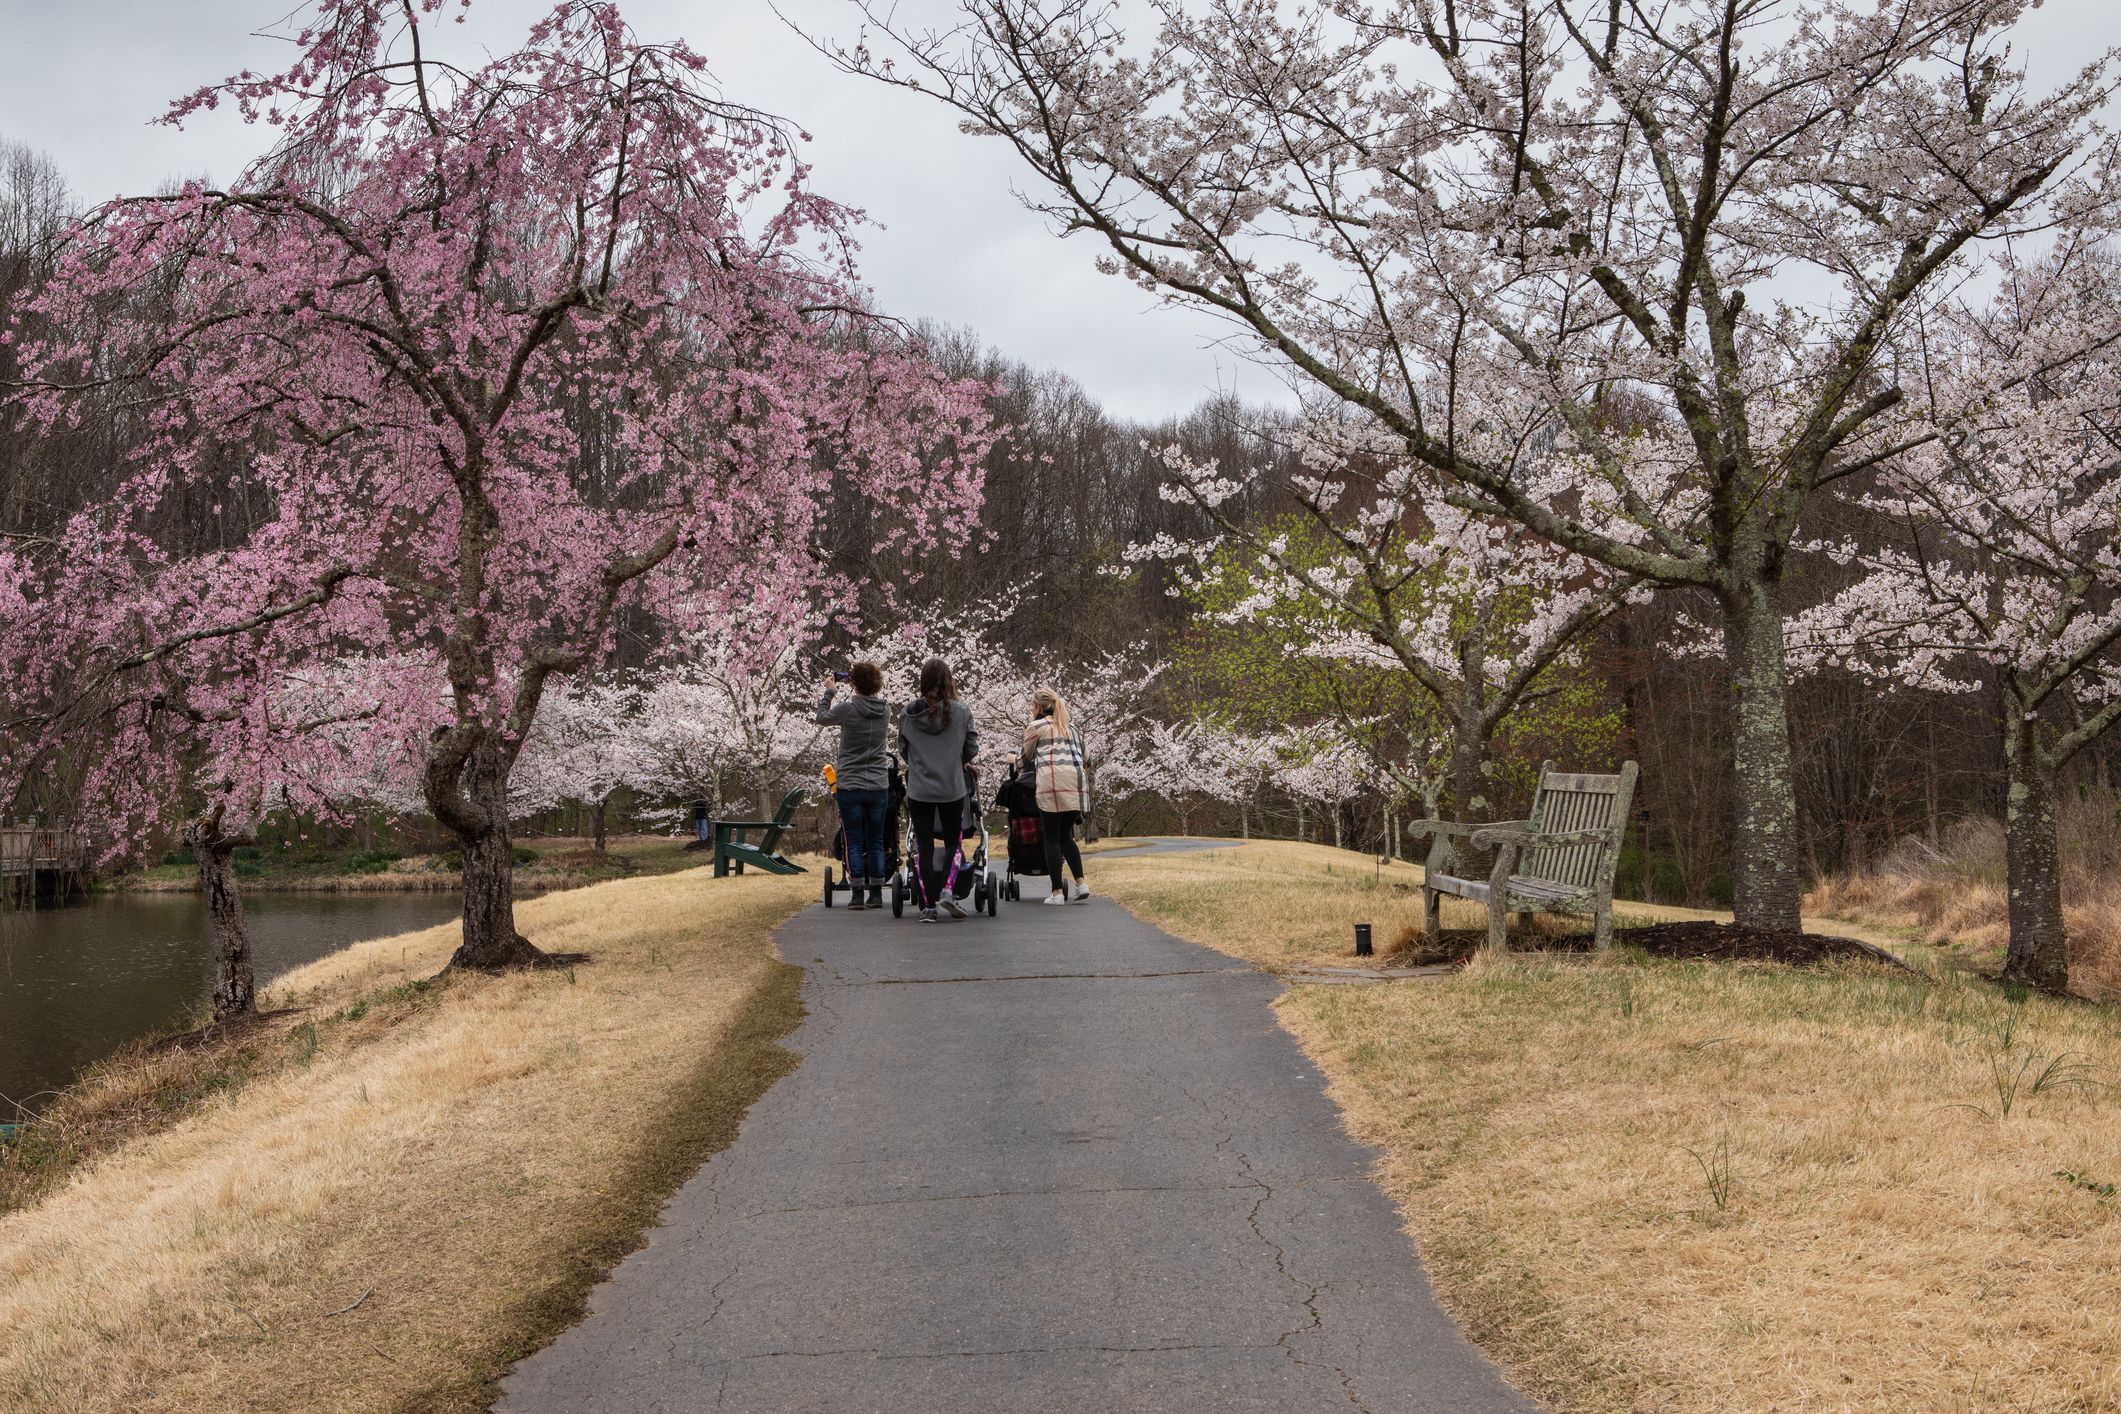 Cherry blossom trees blooming in spring in Meadowlark Park in Vienna, Virginia